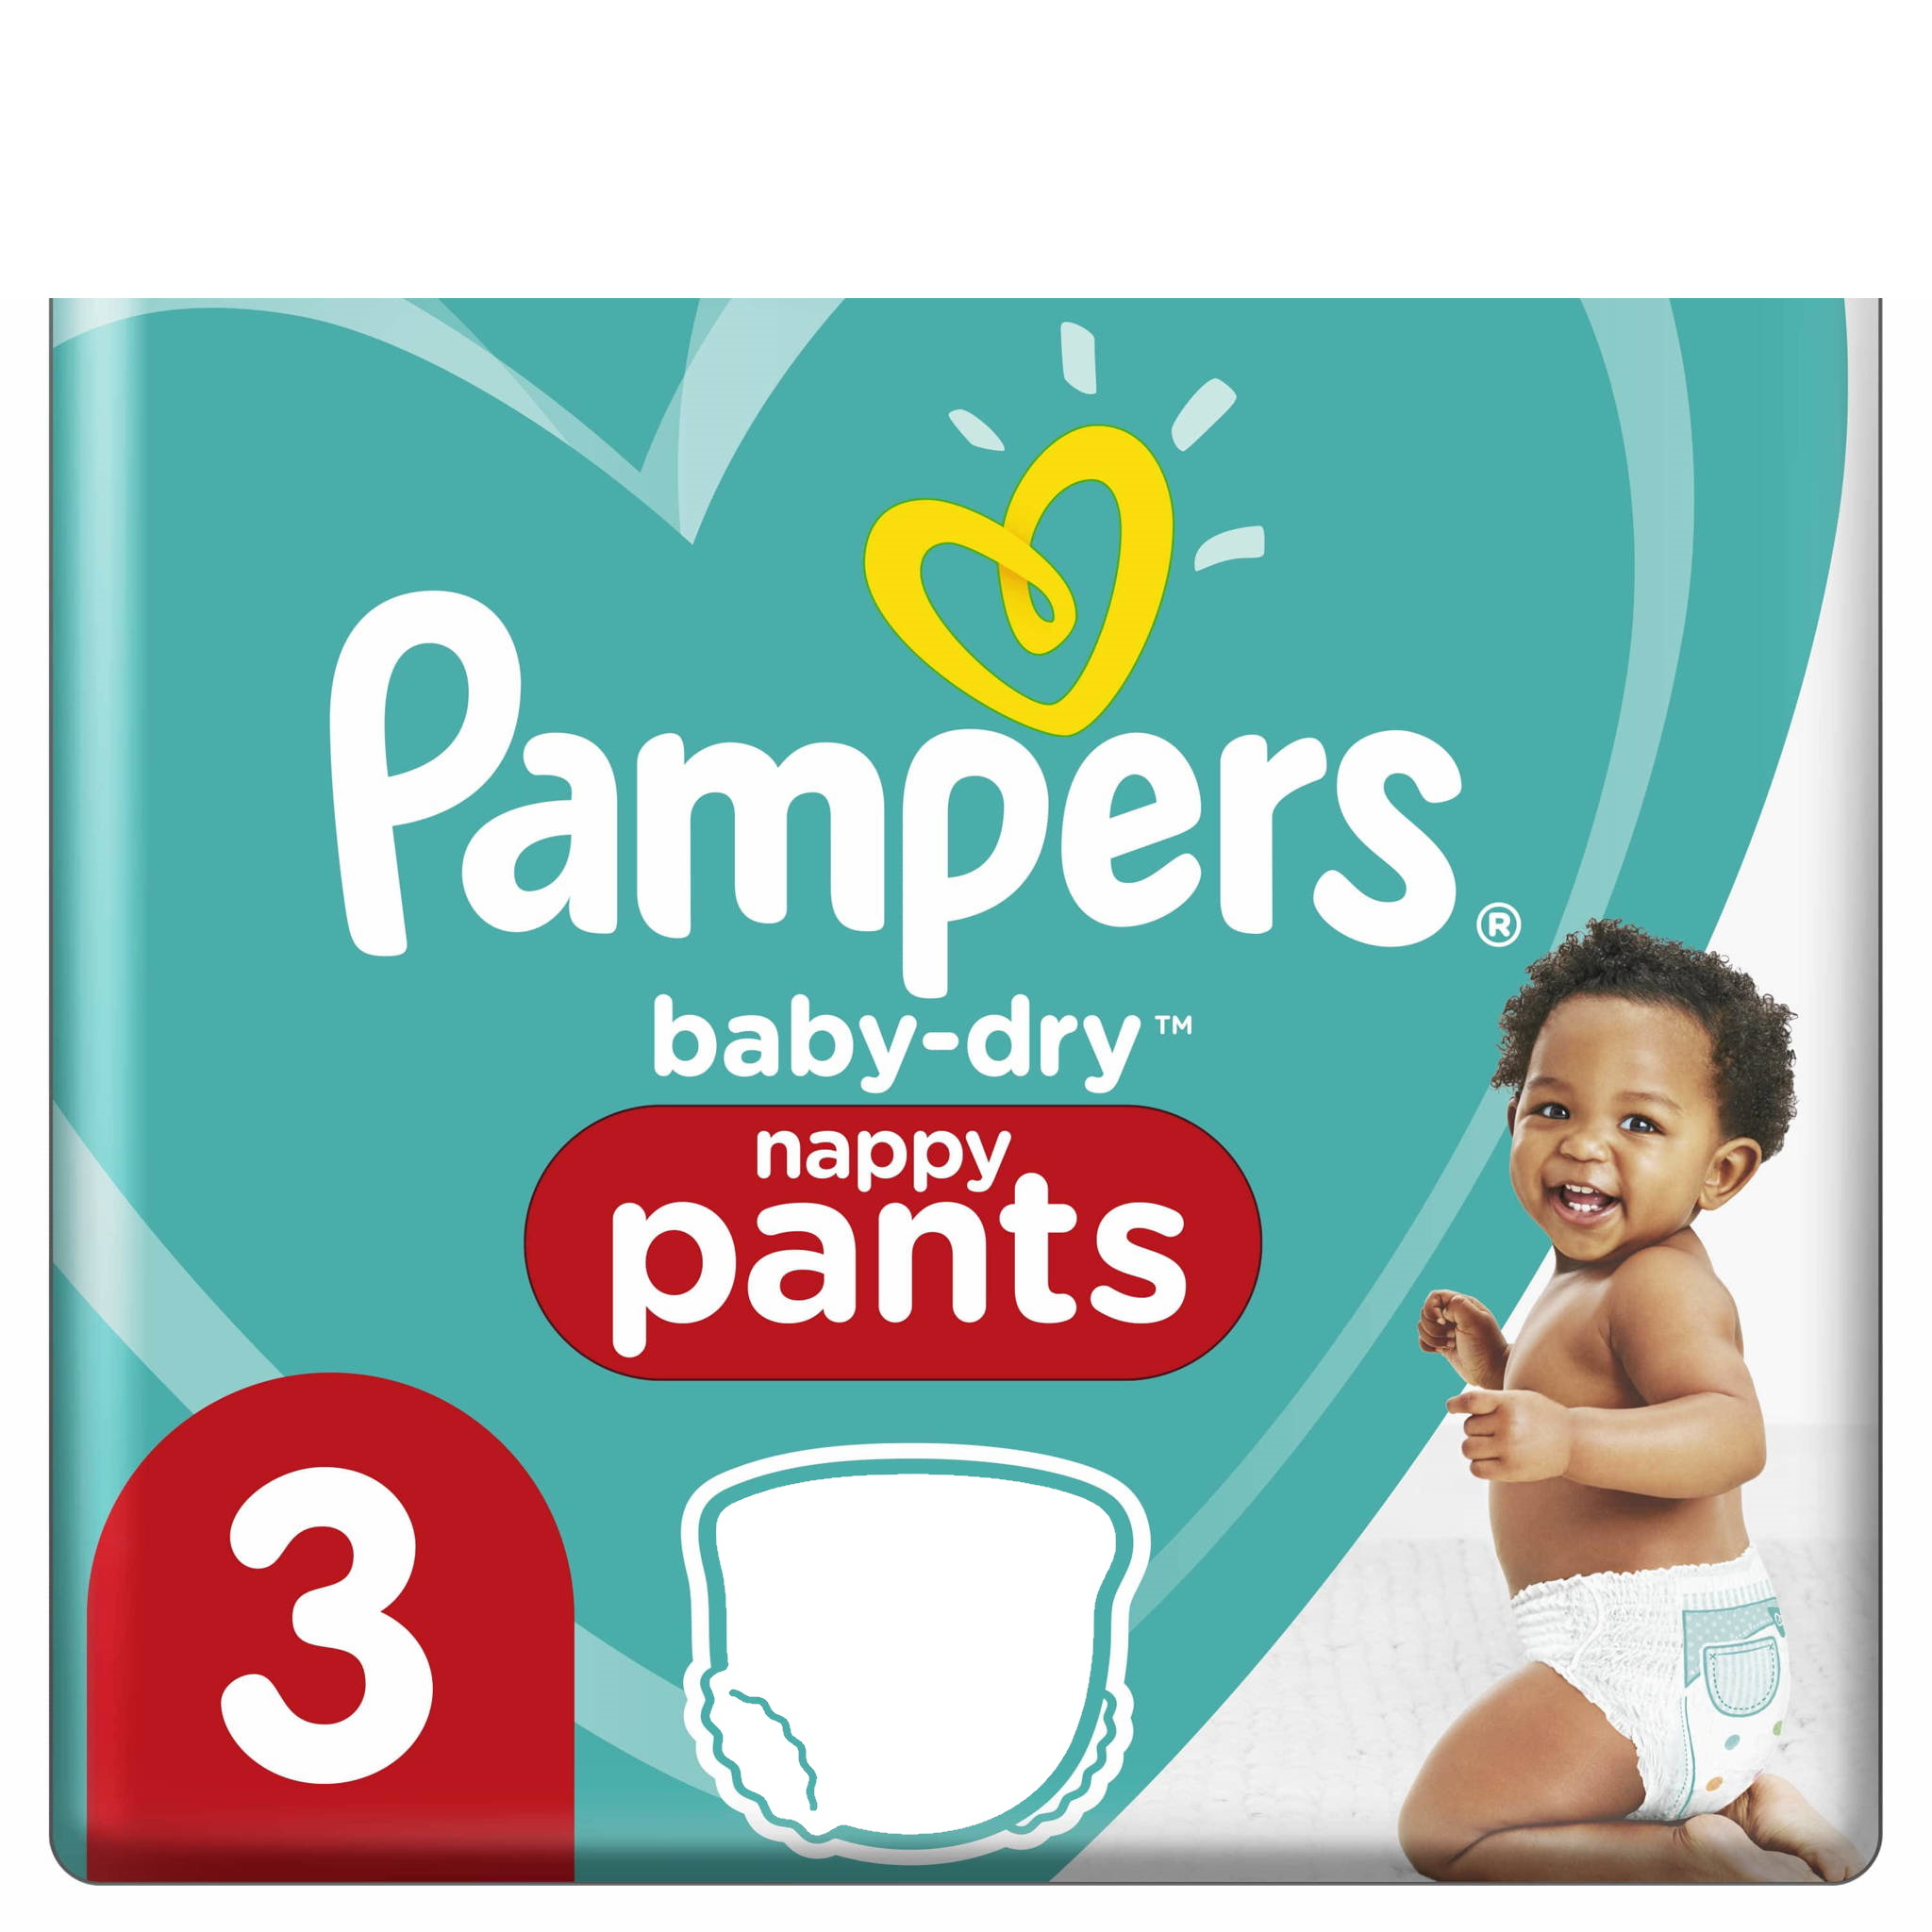 Pampers Baby-Dry Pants Windelhose - Größe 3 (6-11 kg) - 60 Stück - Verpackung beschädigt